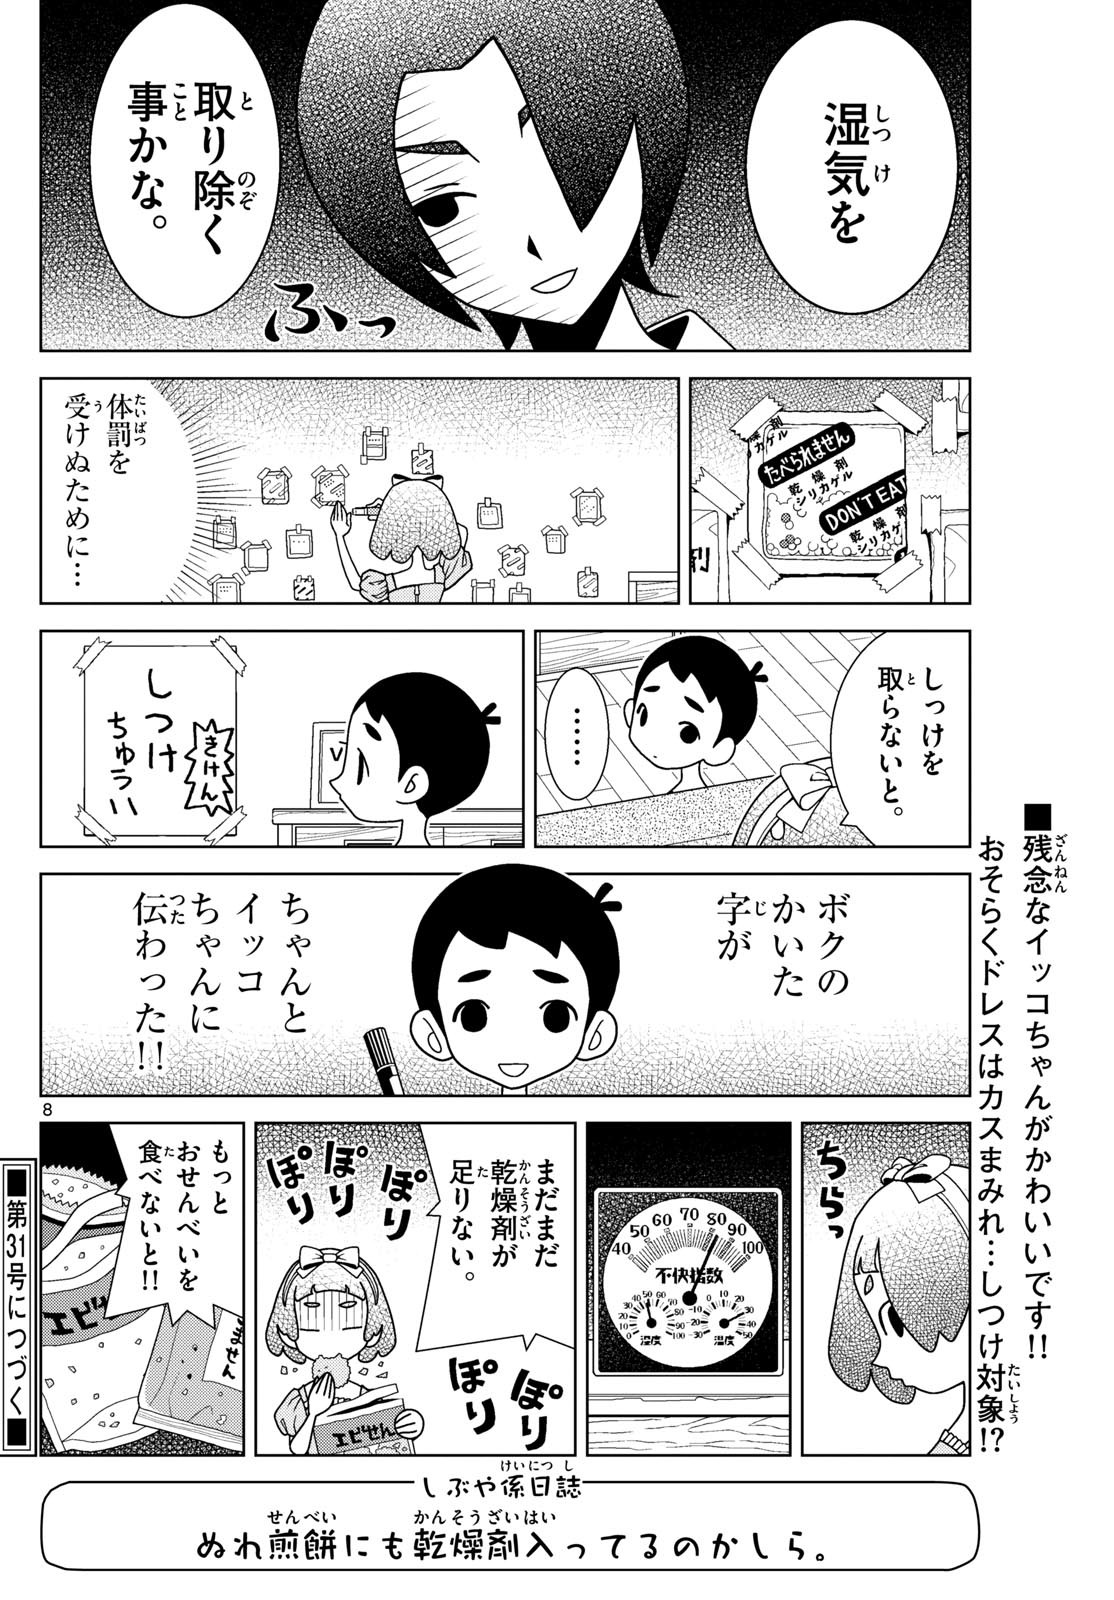 Shibuya Near Family - Chapter 098 - Page 8